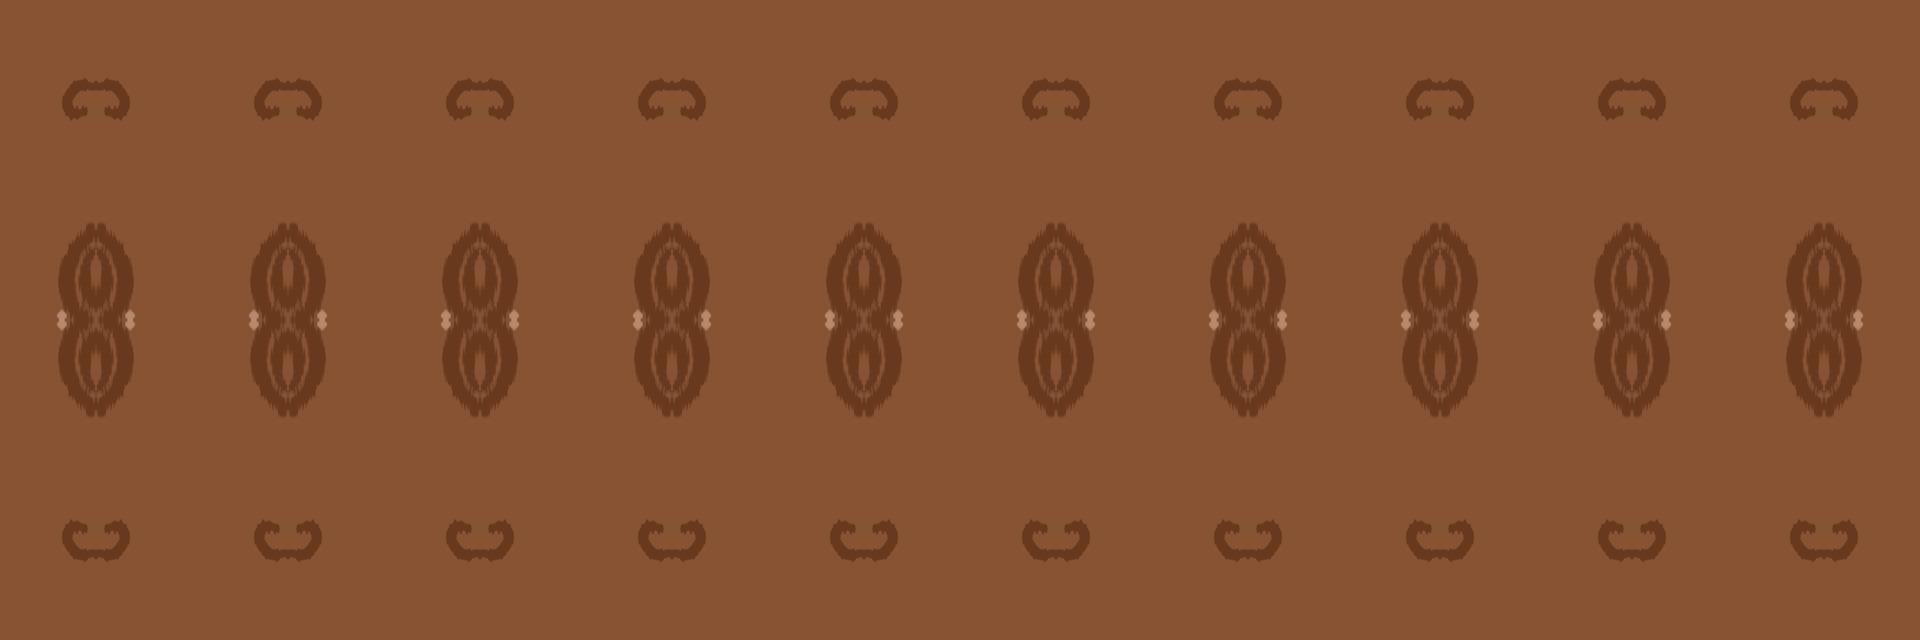 Ikat diamond tribal Aztec Seamless Pattern. Ethnic Geometric Ikkat Batik Digital vector textile Design for Prints Fabric saree Mughal brush symbol Swaths texture Kurti Kurtis Kurtas